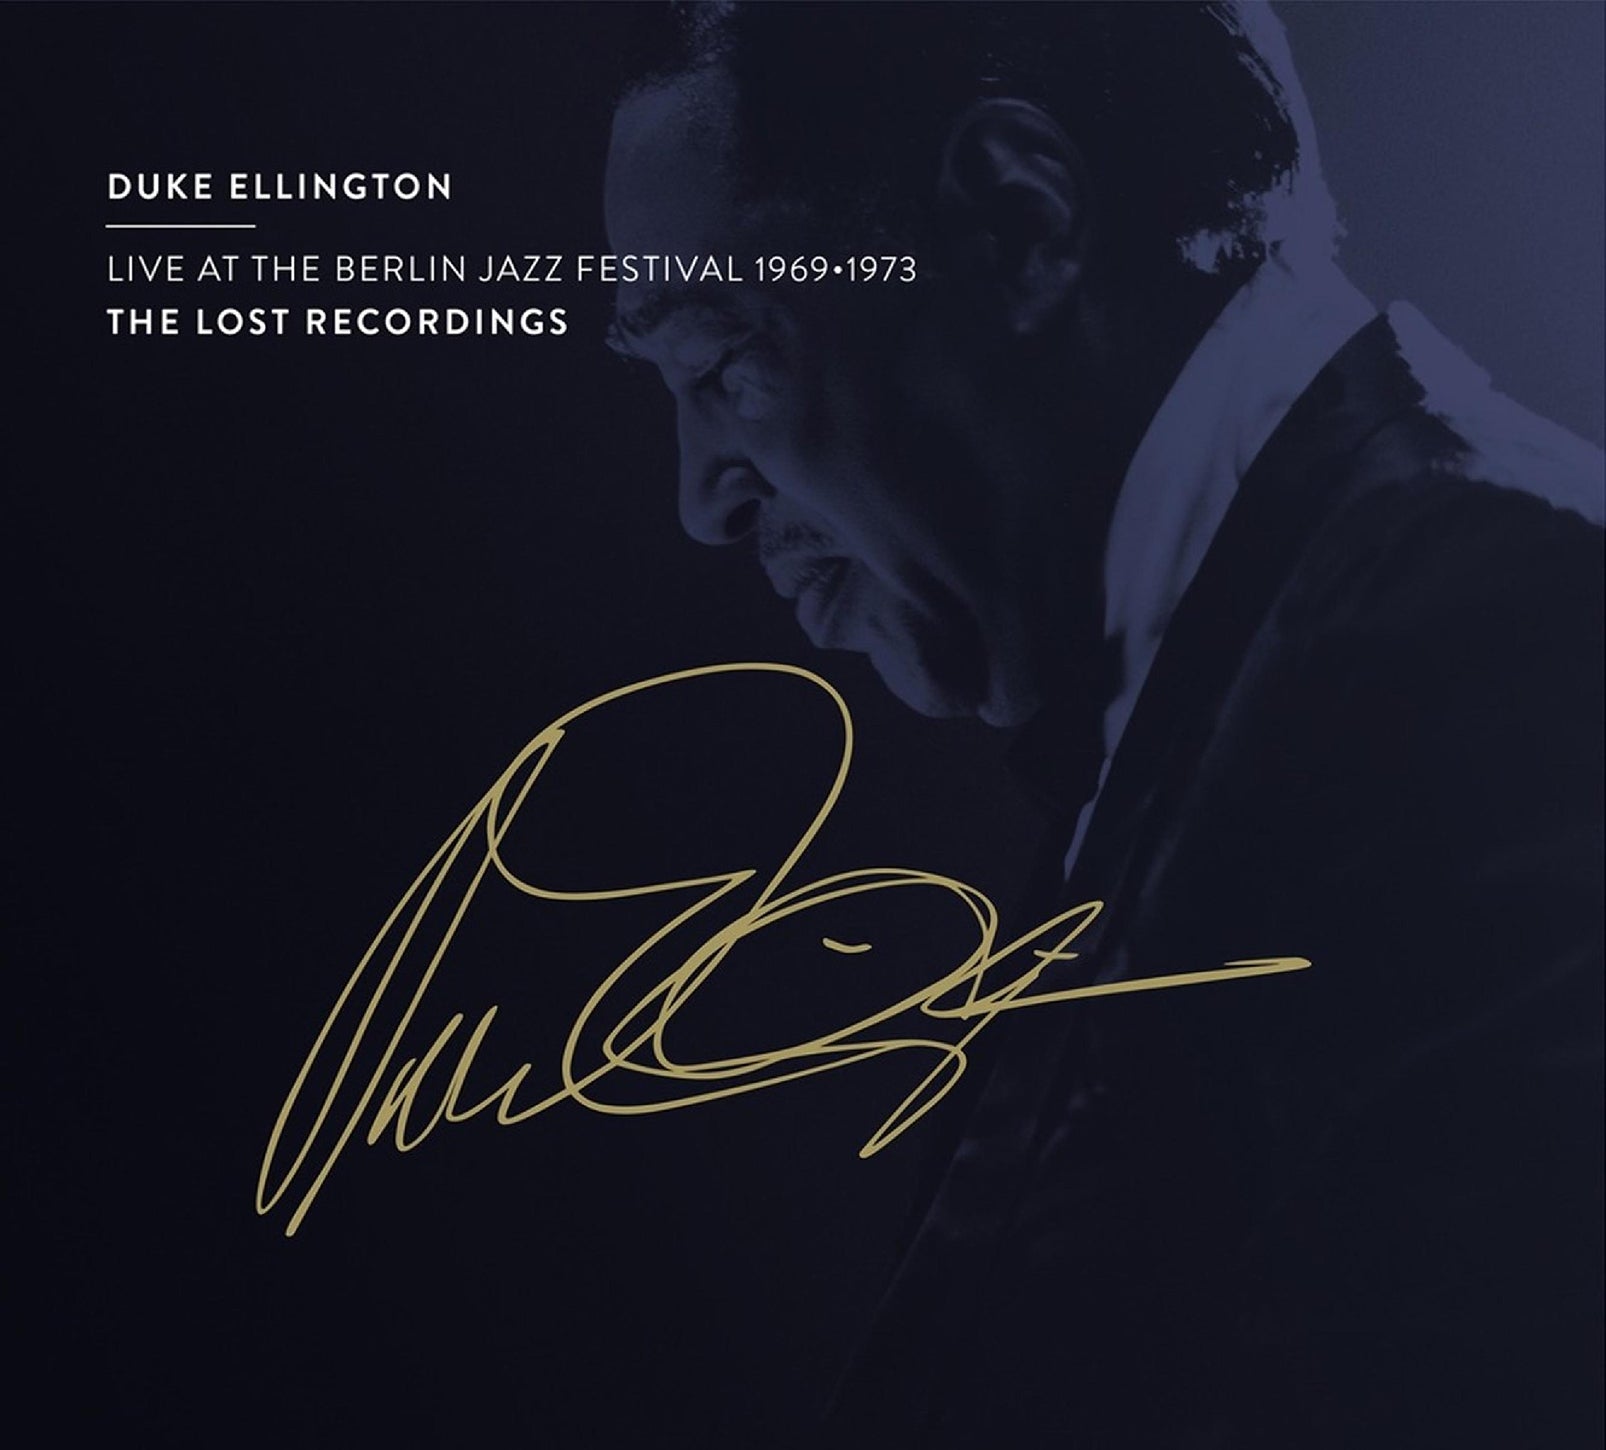 Duke Ellington: Live at the Berlin Jazz Festival 1969-1973